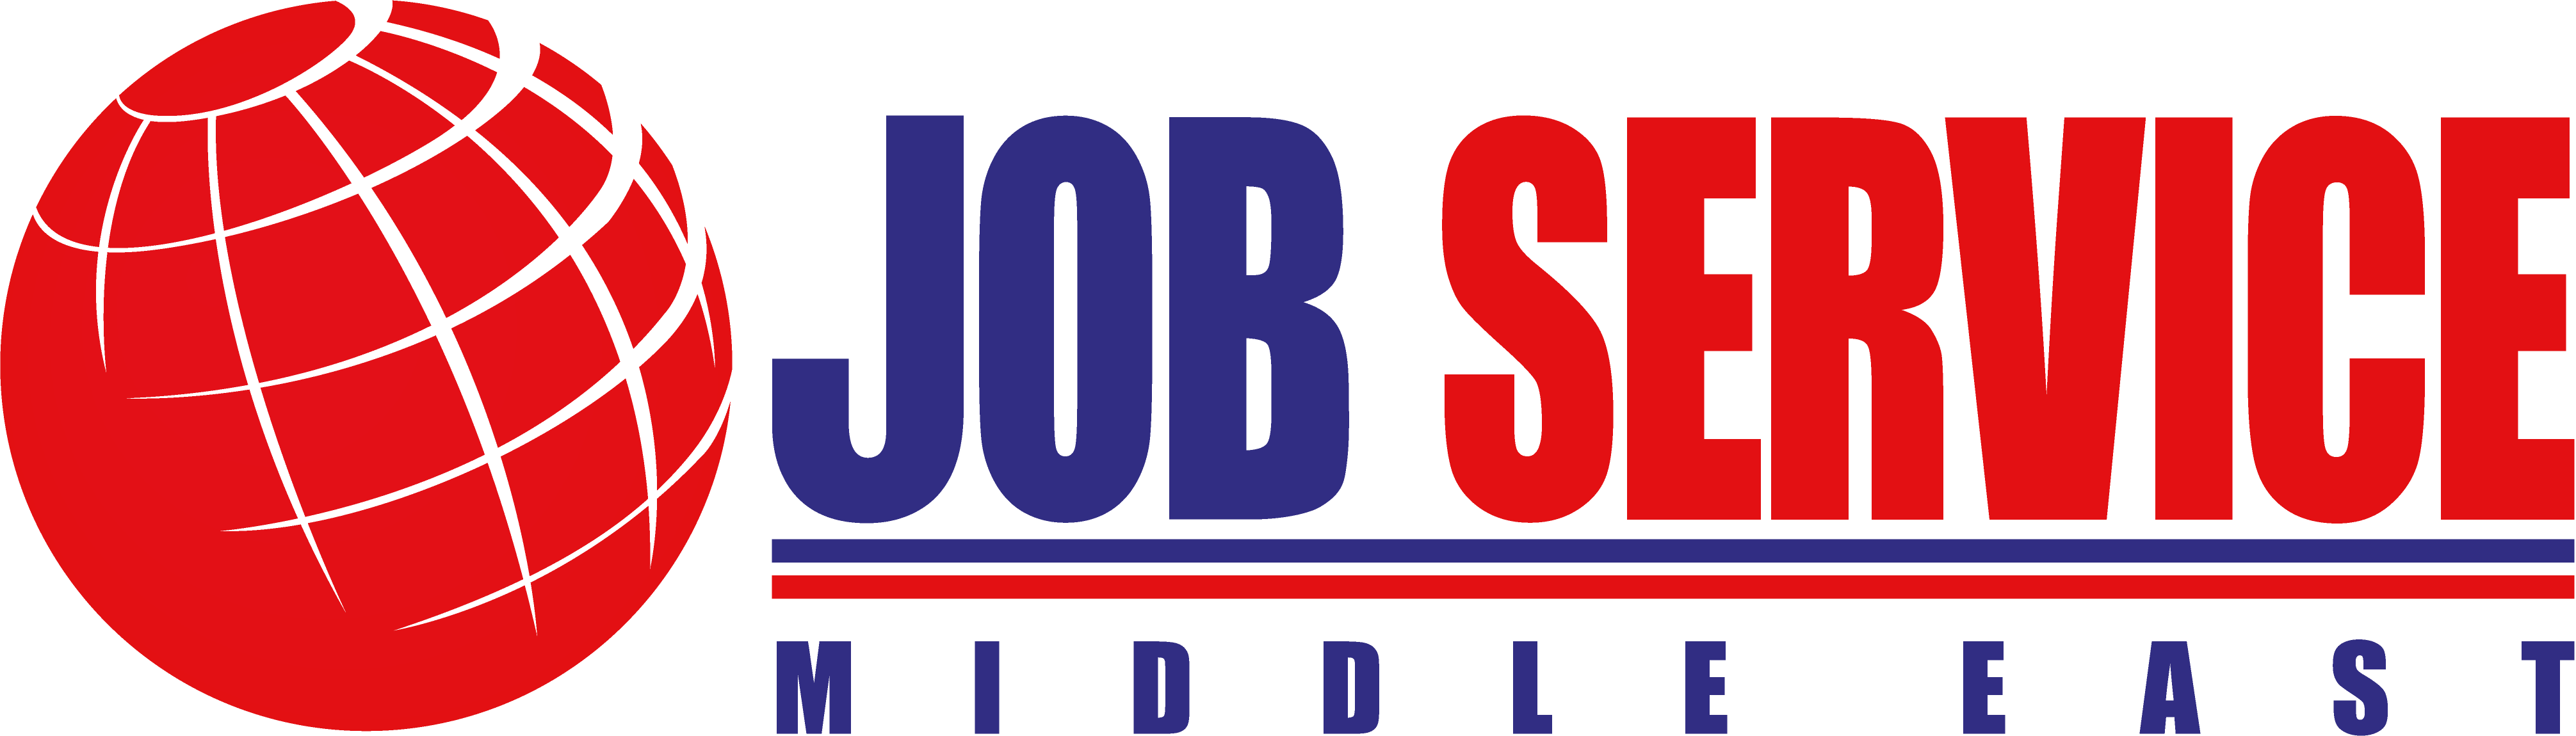 JOB SERVICE MIDDLE EAST Logo